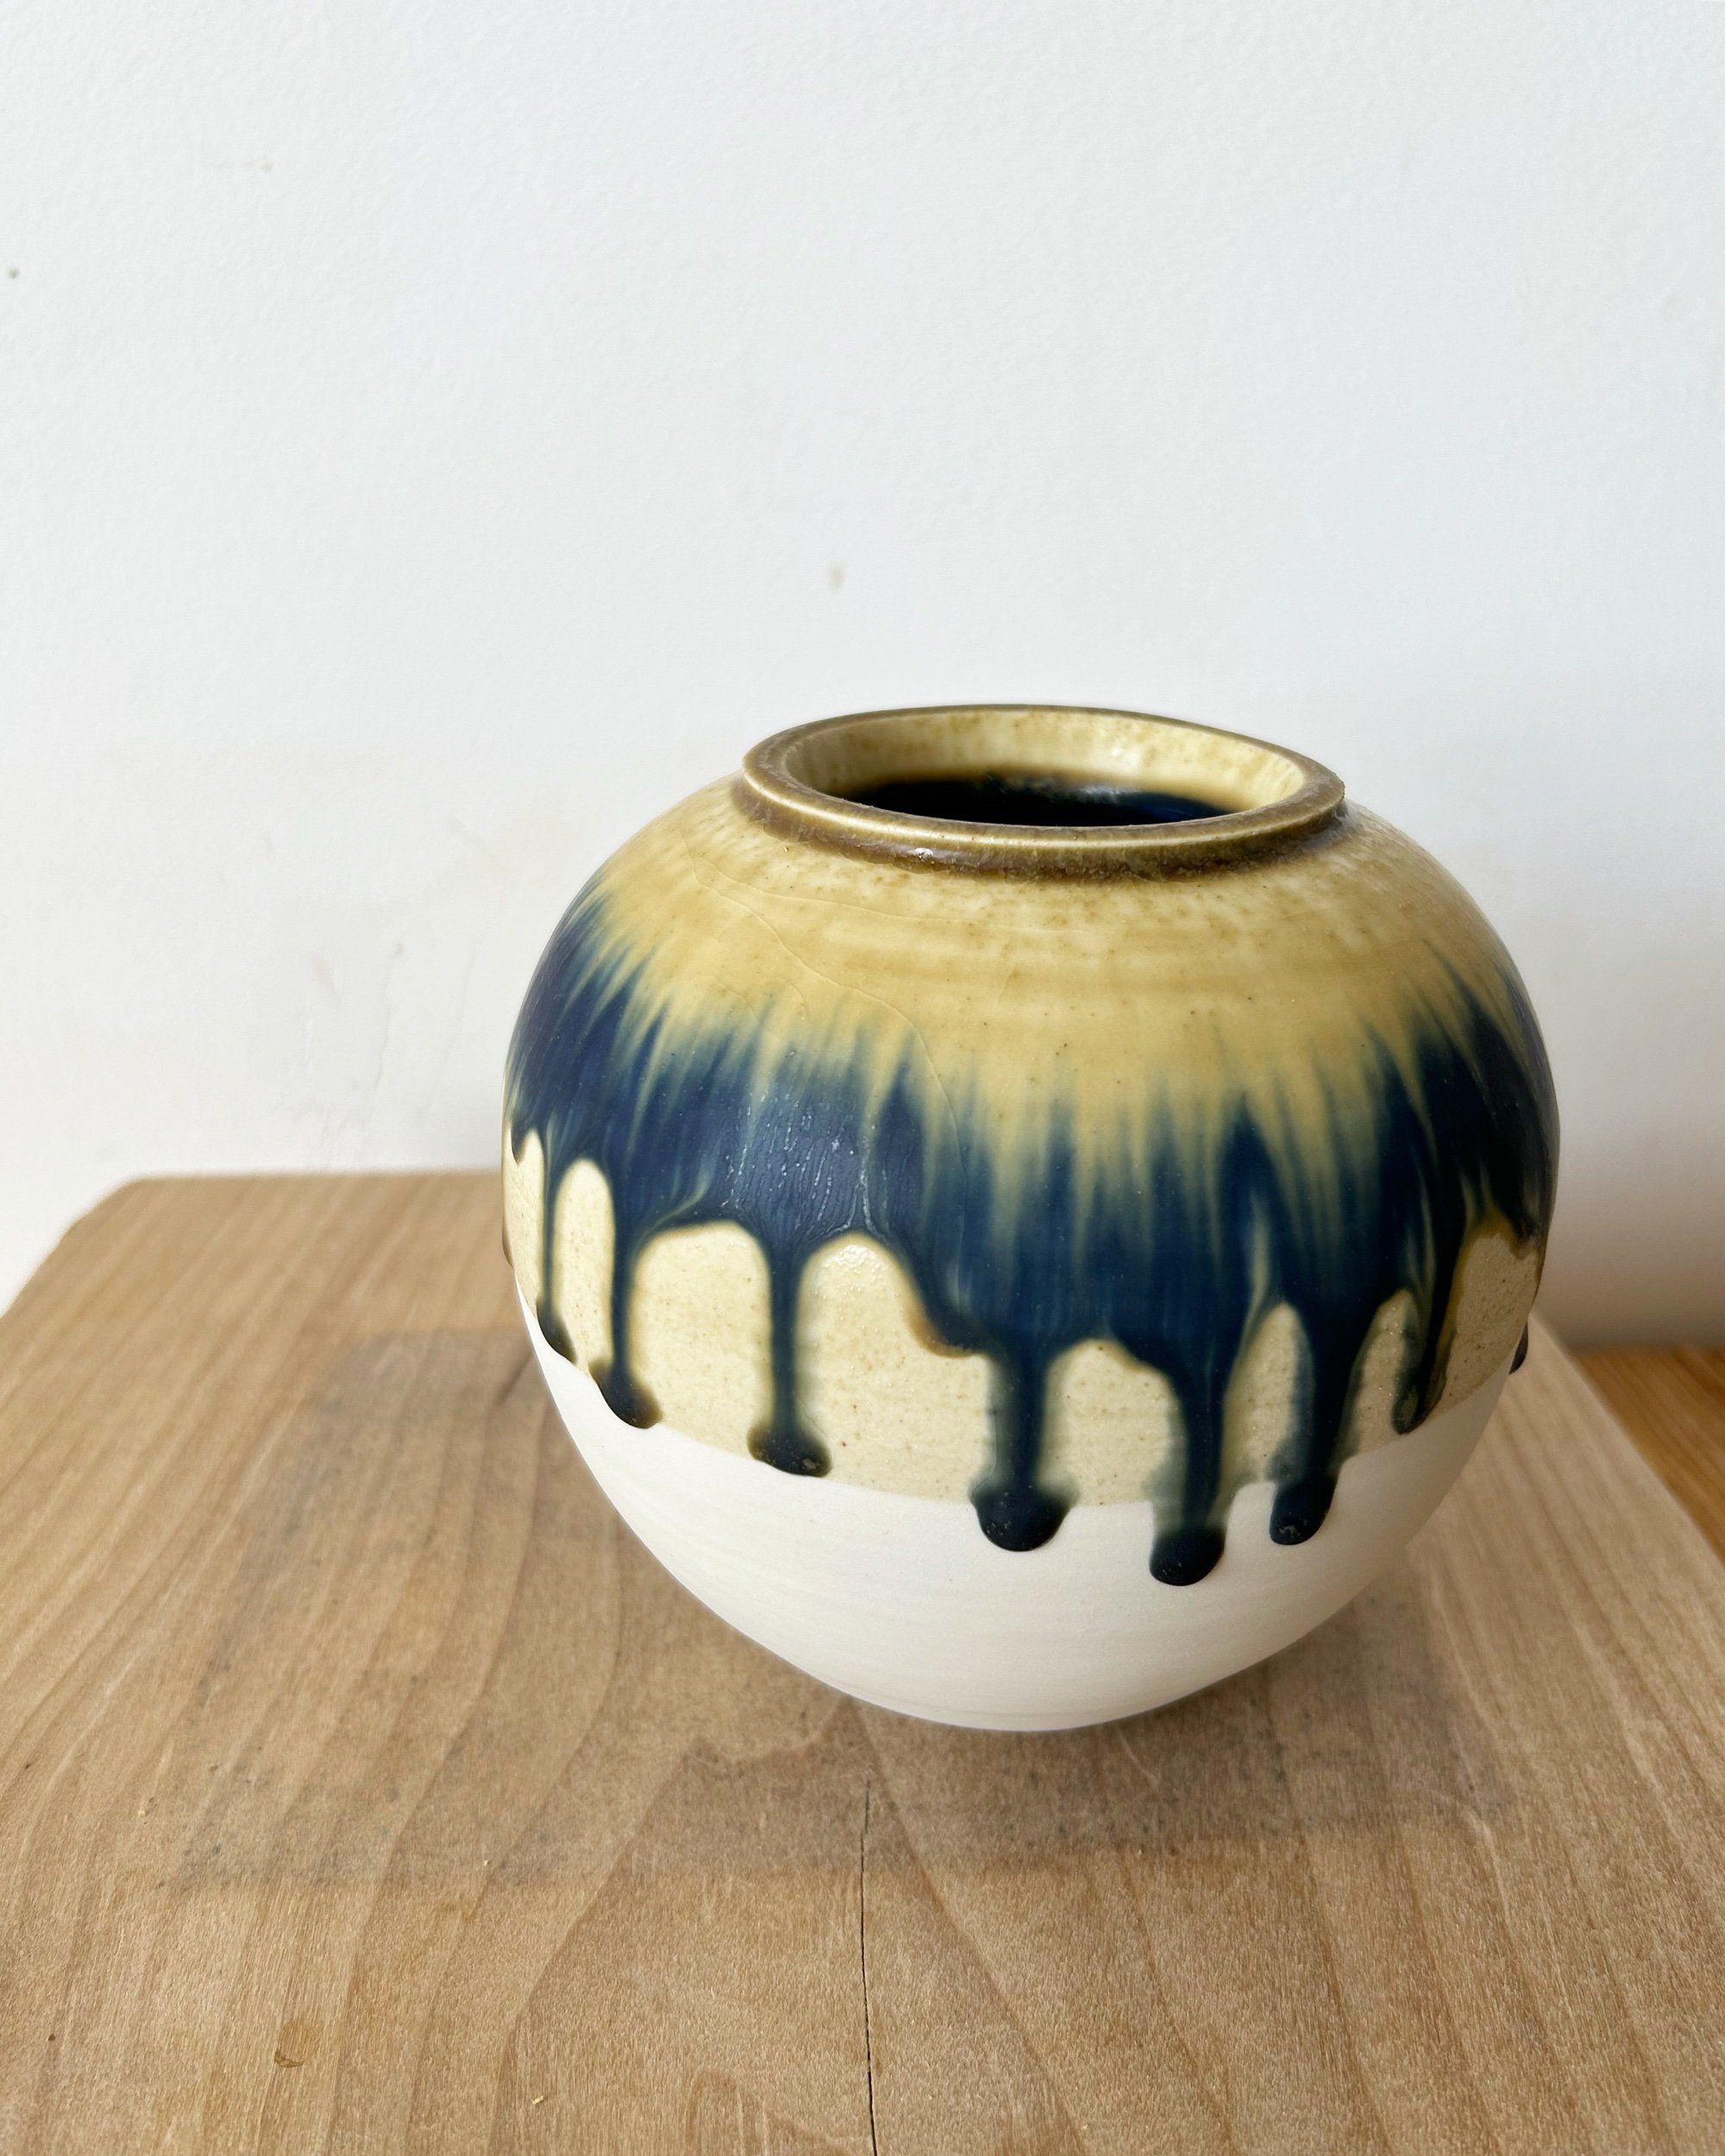 Ash glazed vase with running cobalt